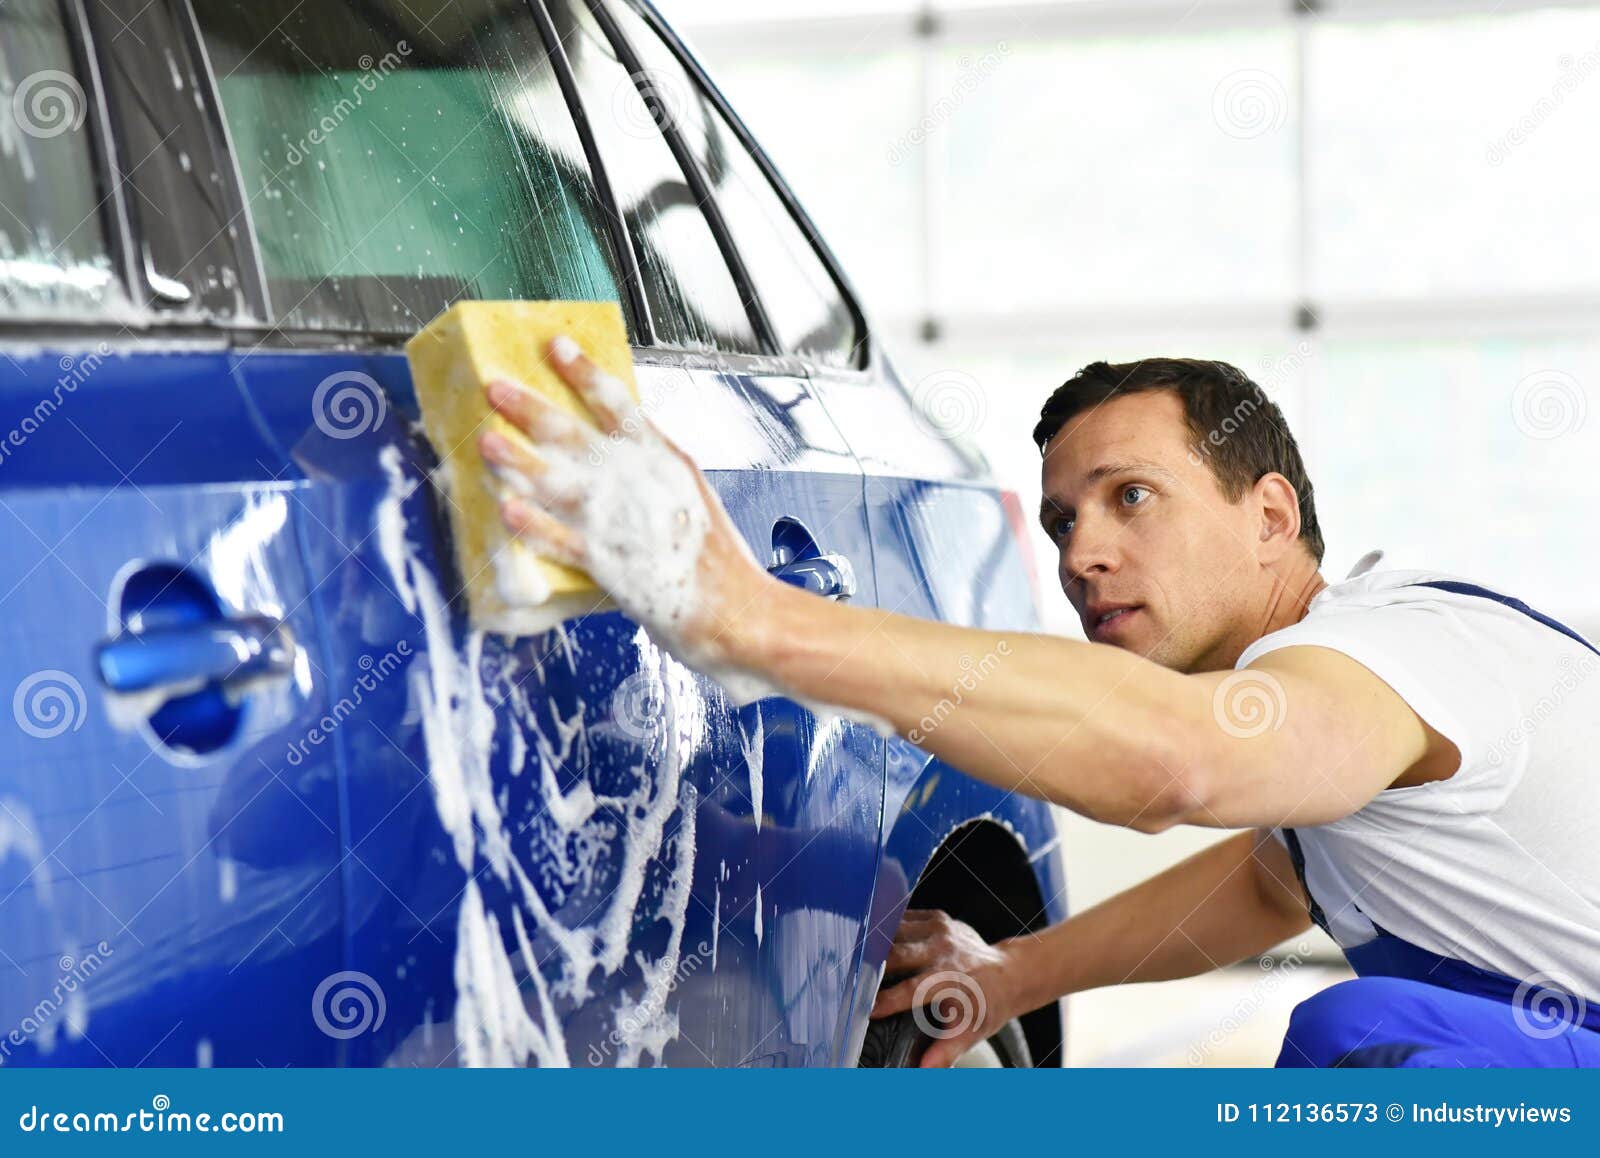 Automotive cleaner attendant jobs